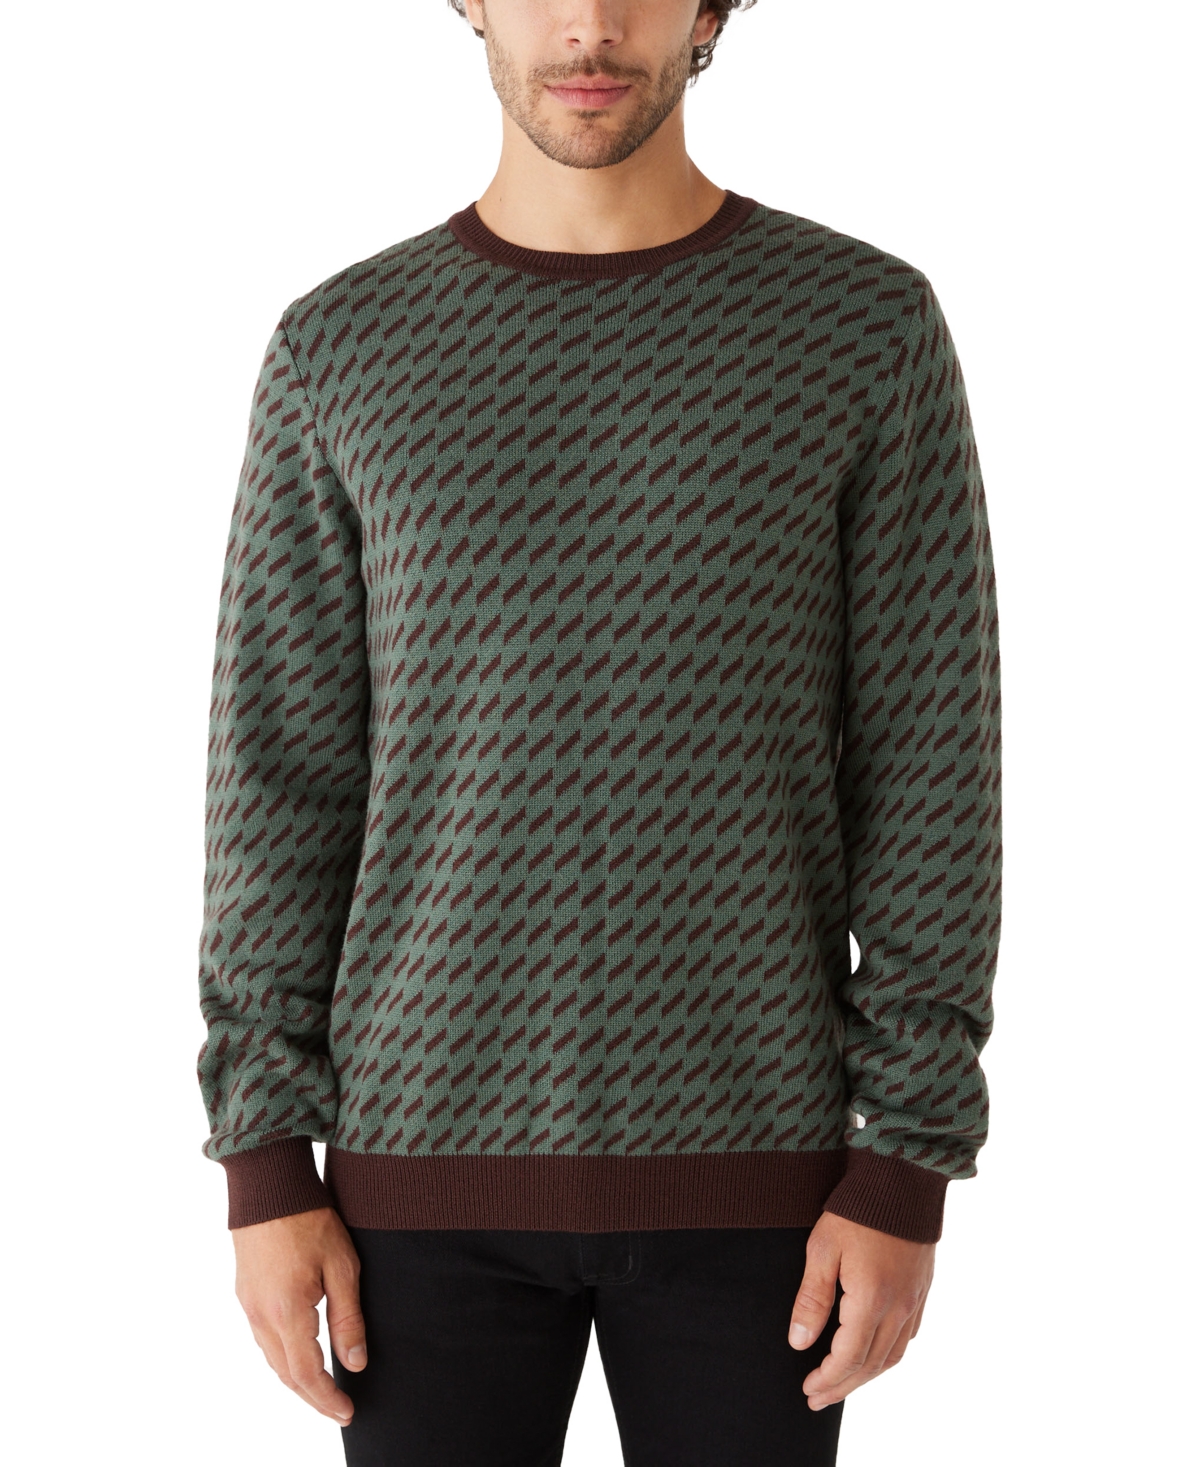 Men's Jacquard Merino Sweater - Light Green